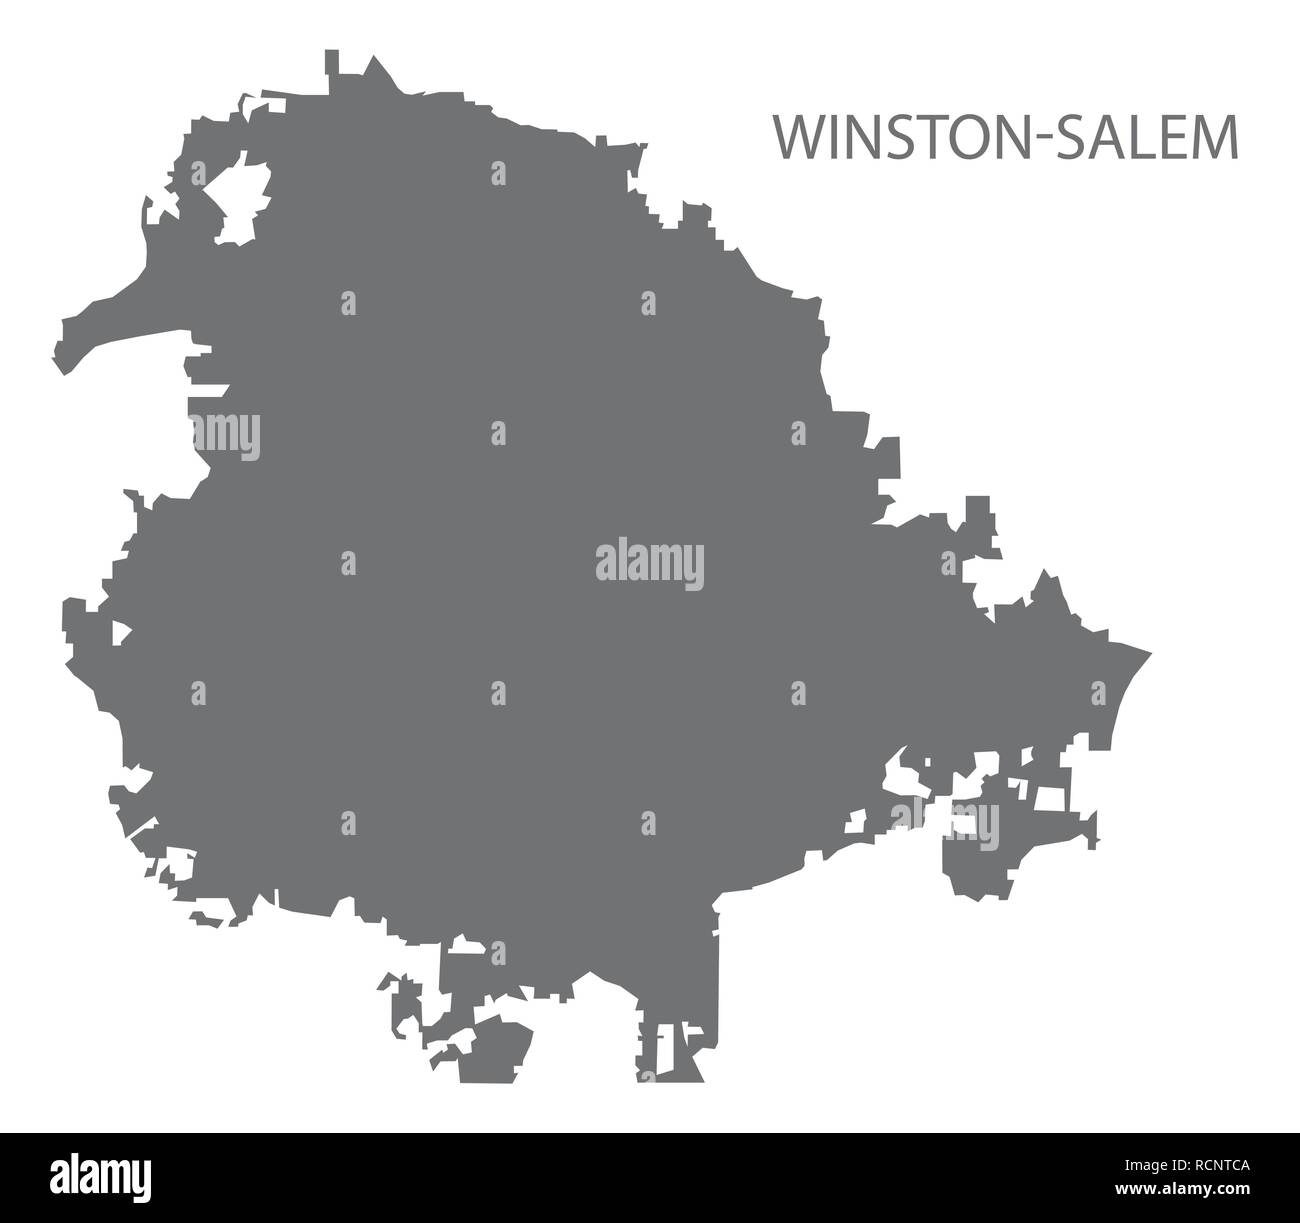 Winston-Salem North Carolina city map grey illustration silhouette Stock Vector